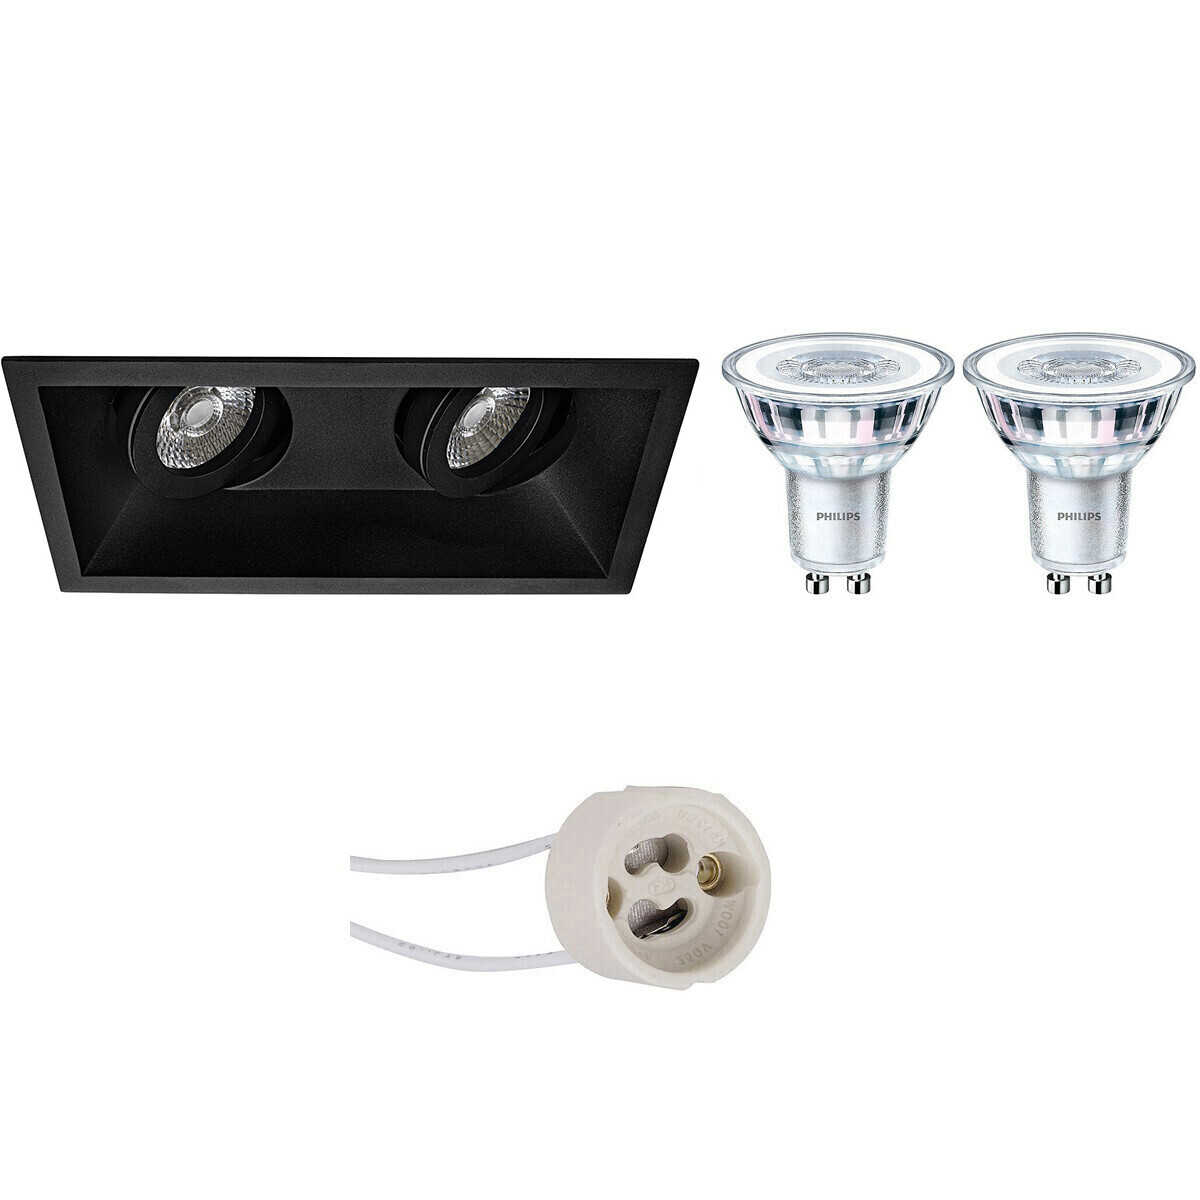 BES LED LED Spot Set - Pragmi Zano Pro - GU10 Fitting - Inbouw Rechthoek Dubbel - Mat Zwart - Kantelbaar - 185x93mm - Philips - CorePro 840 36D - 4.6W - Natuurlijk Wit 4000K